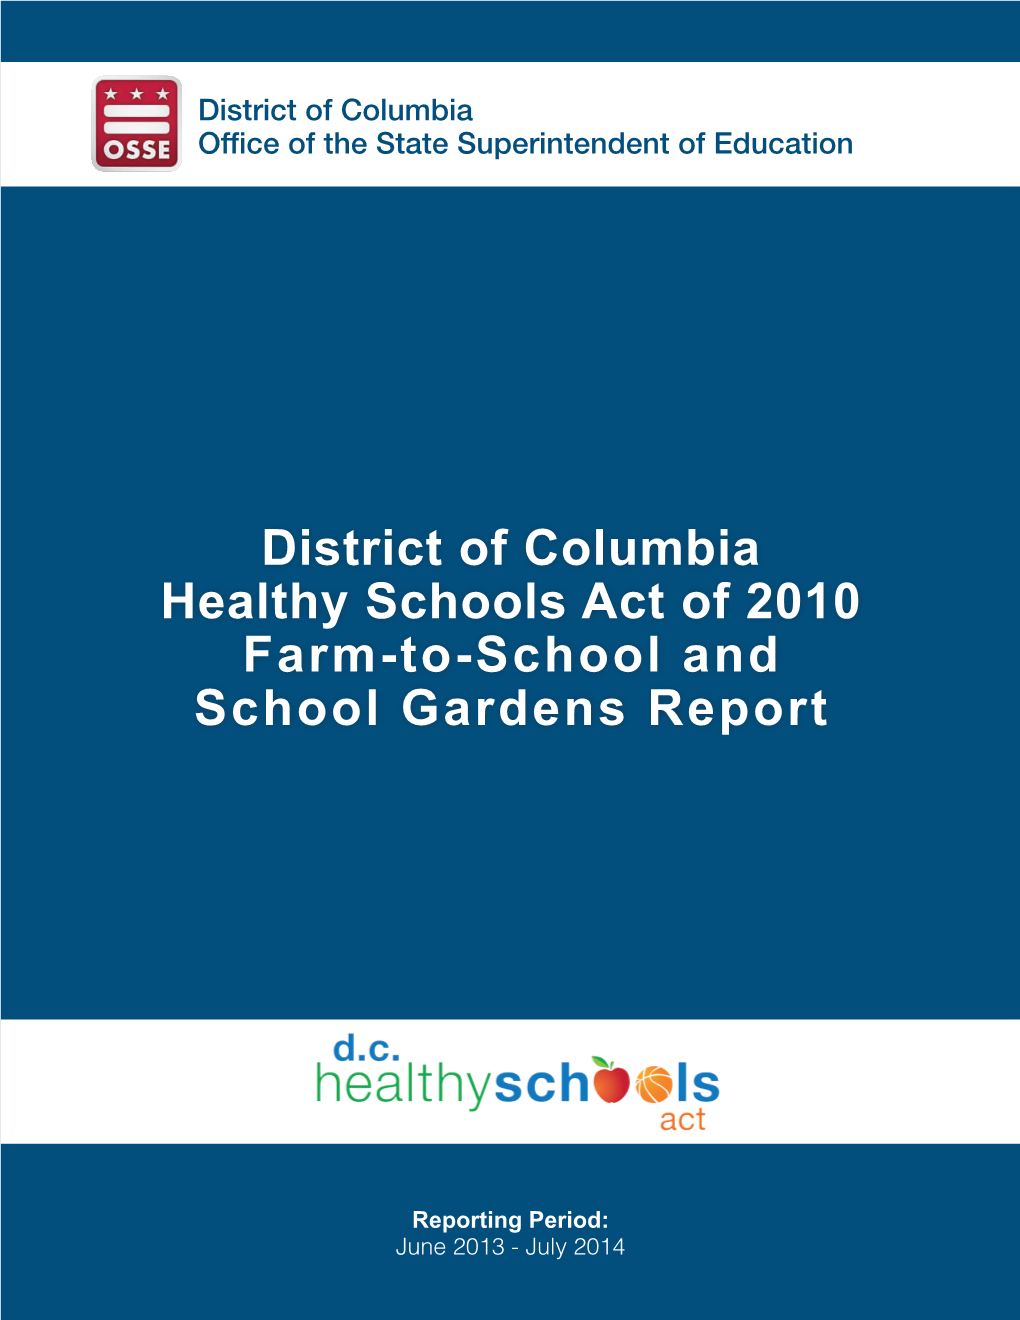 District of Columbia Healthy Schools Act of 2010 Farm-To-School and School Gardens Report